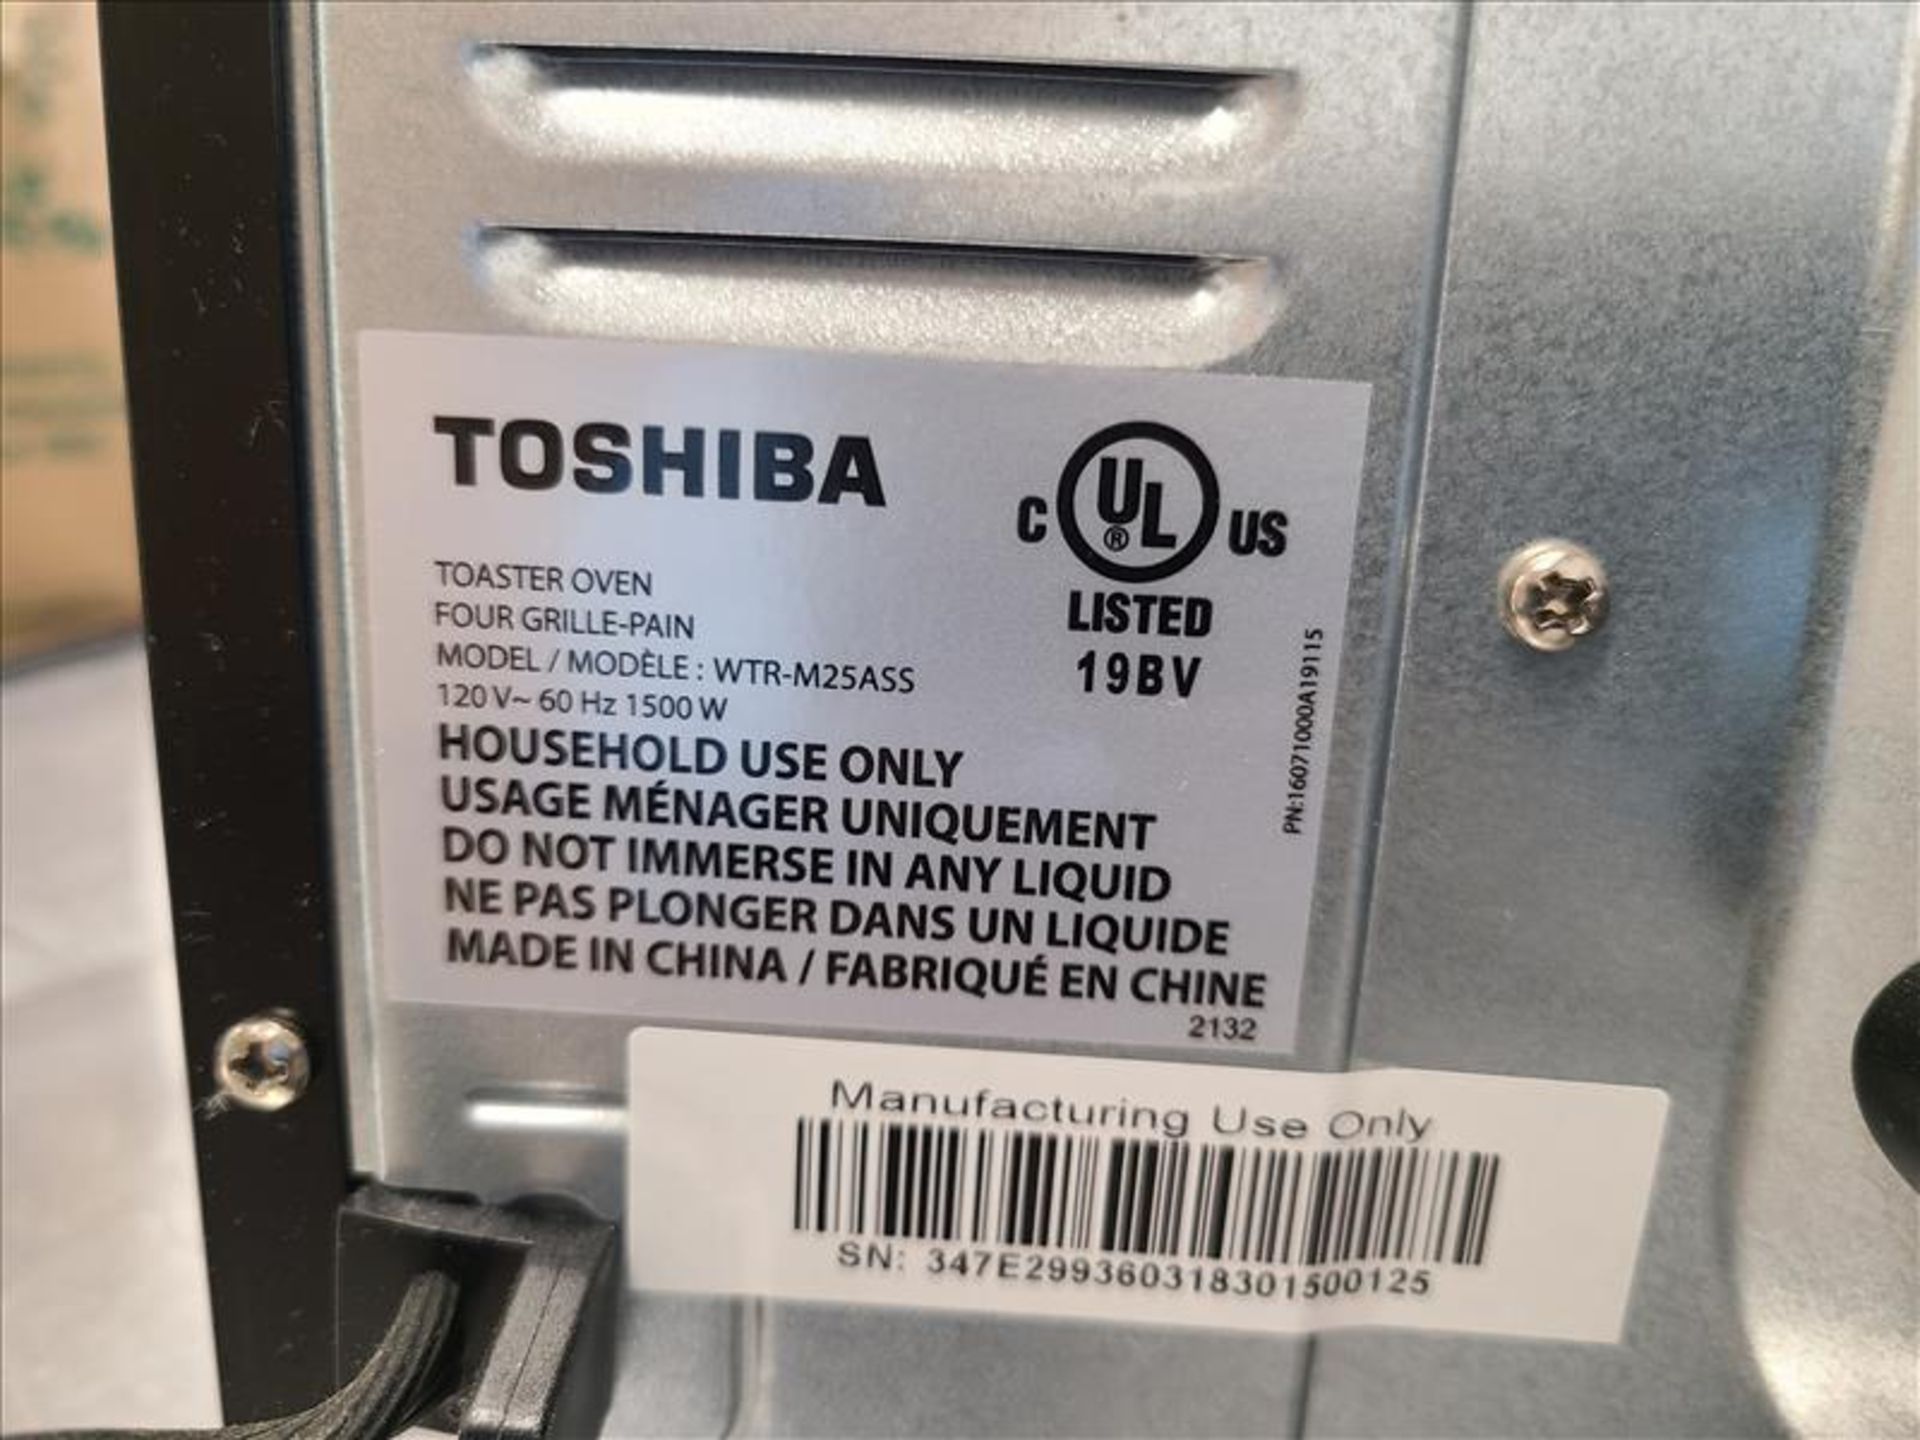 Toshiba Toaster Oven, mod. WTR-M25ASS, ser. no. 347E299360318301500125, 120 volts, 60 Hz [Loc.Test - Image 3 of 3